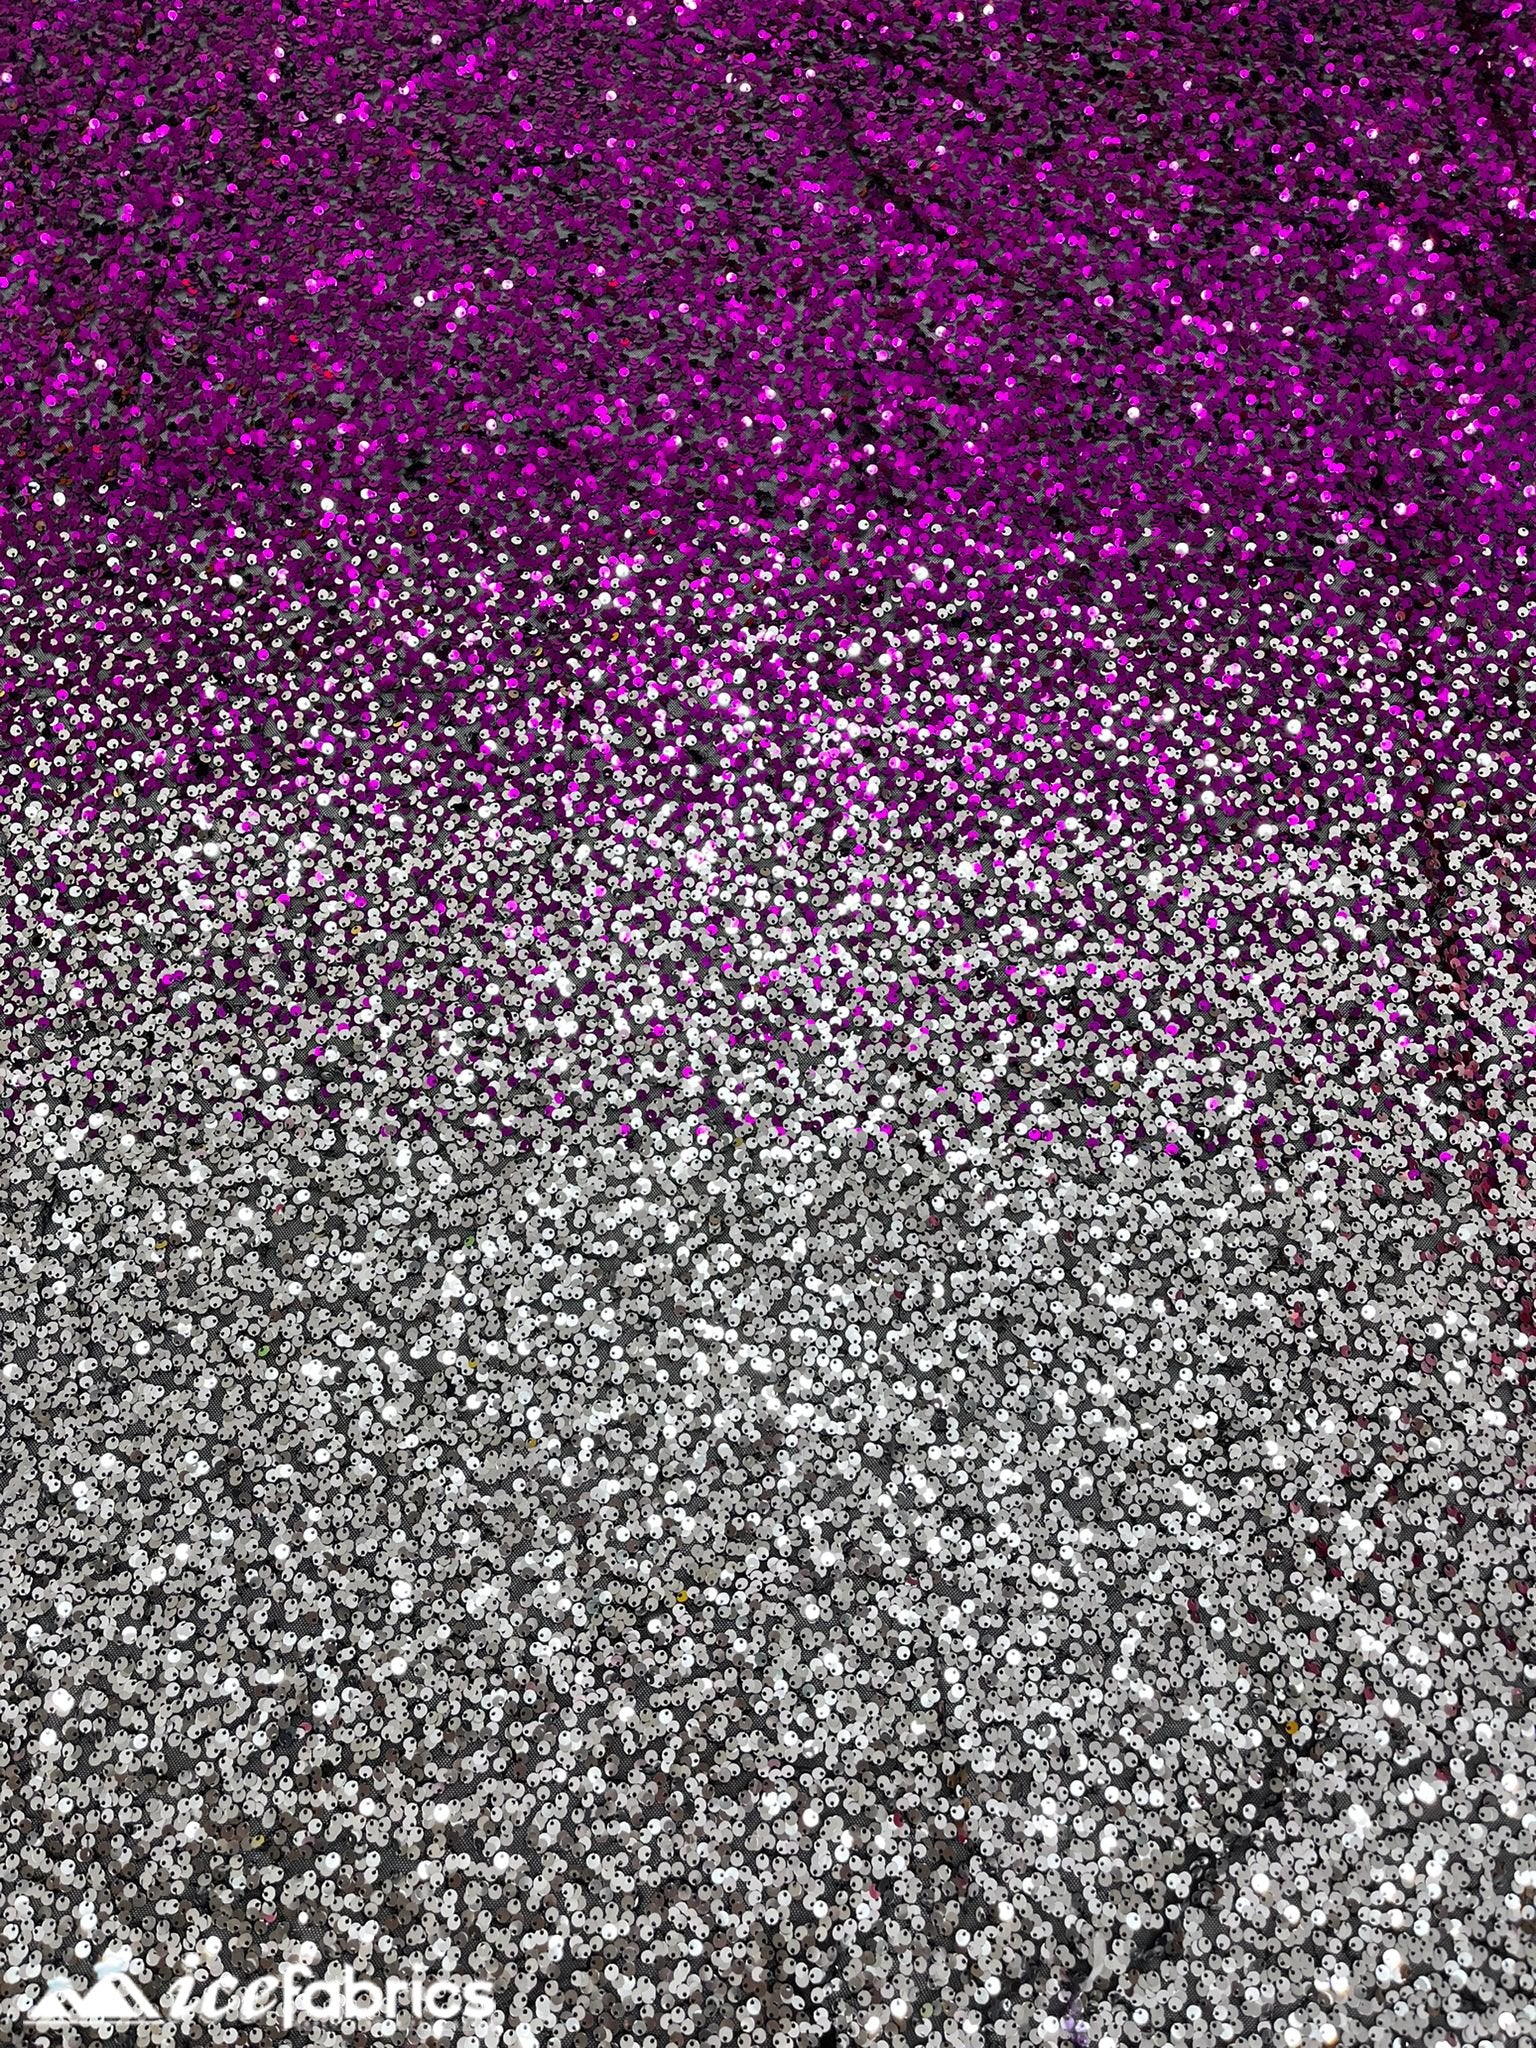 Iridescent Purple Silver 3 Tone 4 Way Stretch Sequin Fabric on Black Mesh LaceICE FABRICSICE FABRICSBy The Yard (58" Wide)Iridescent Purple Silver 3 Tone 4 Way Stretch Sequin Fabric on Black Mesh Lace ICE FABRICS